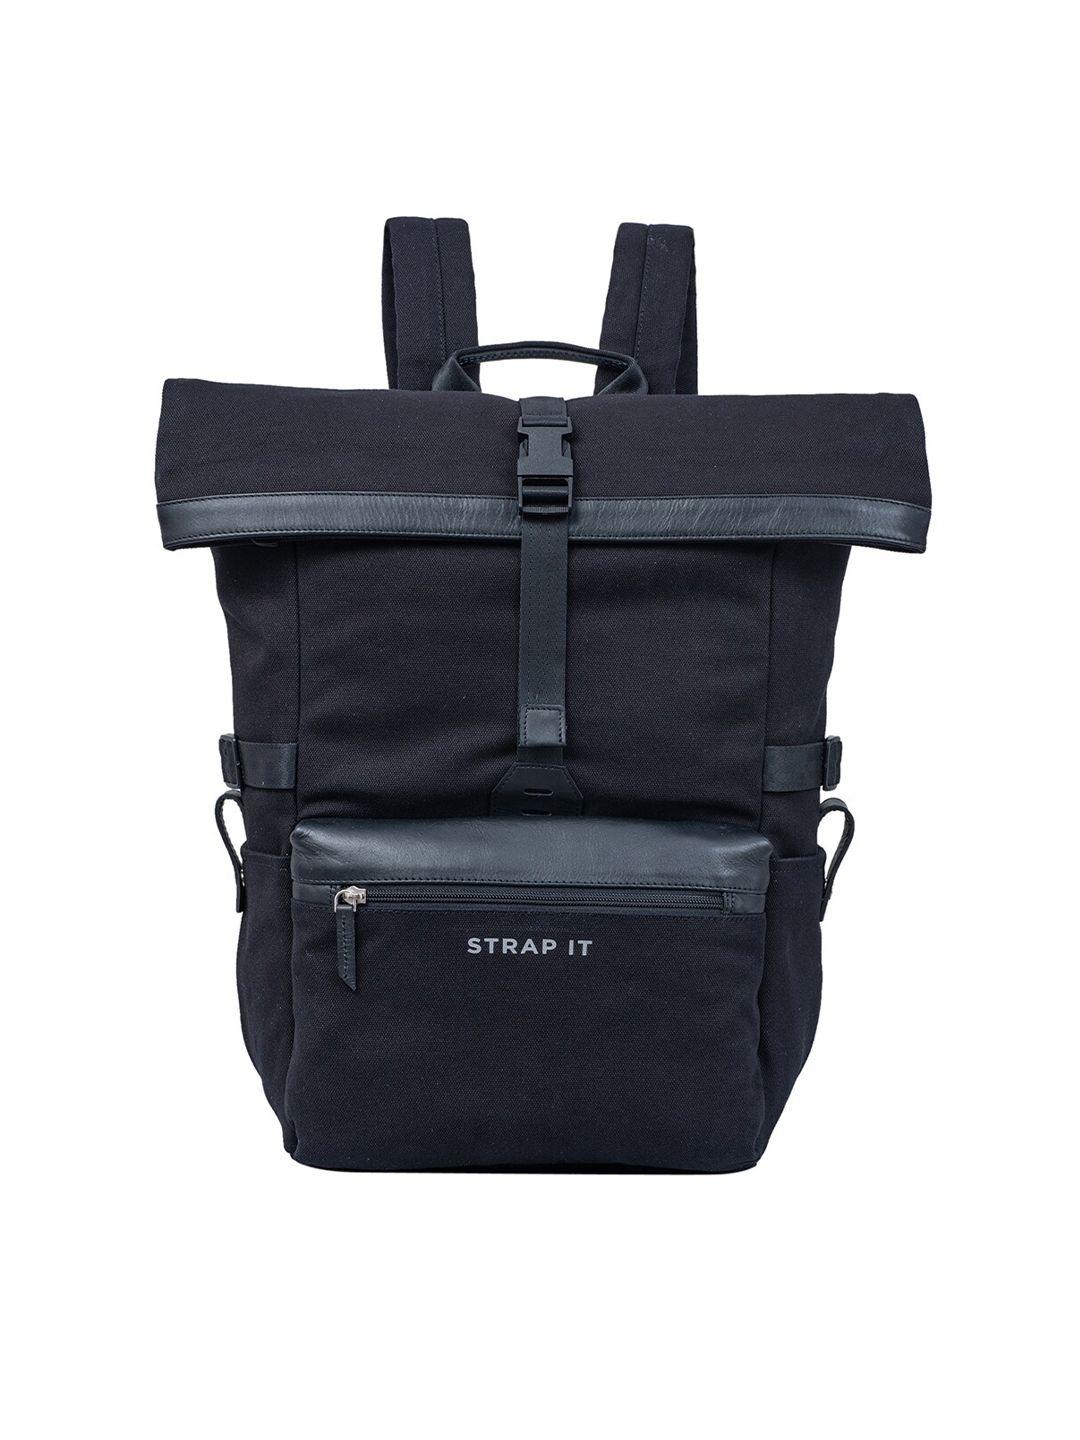 strap it unisex black laptop backpack